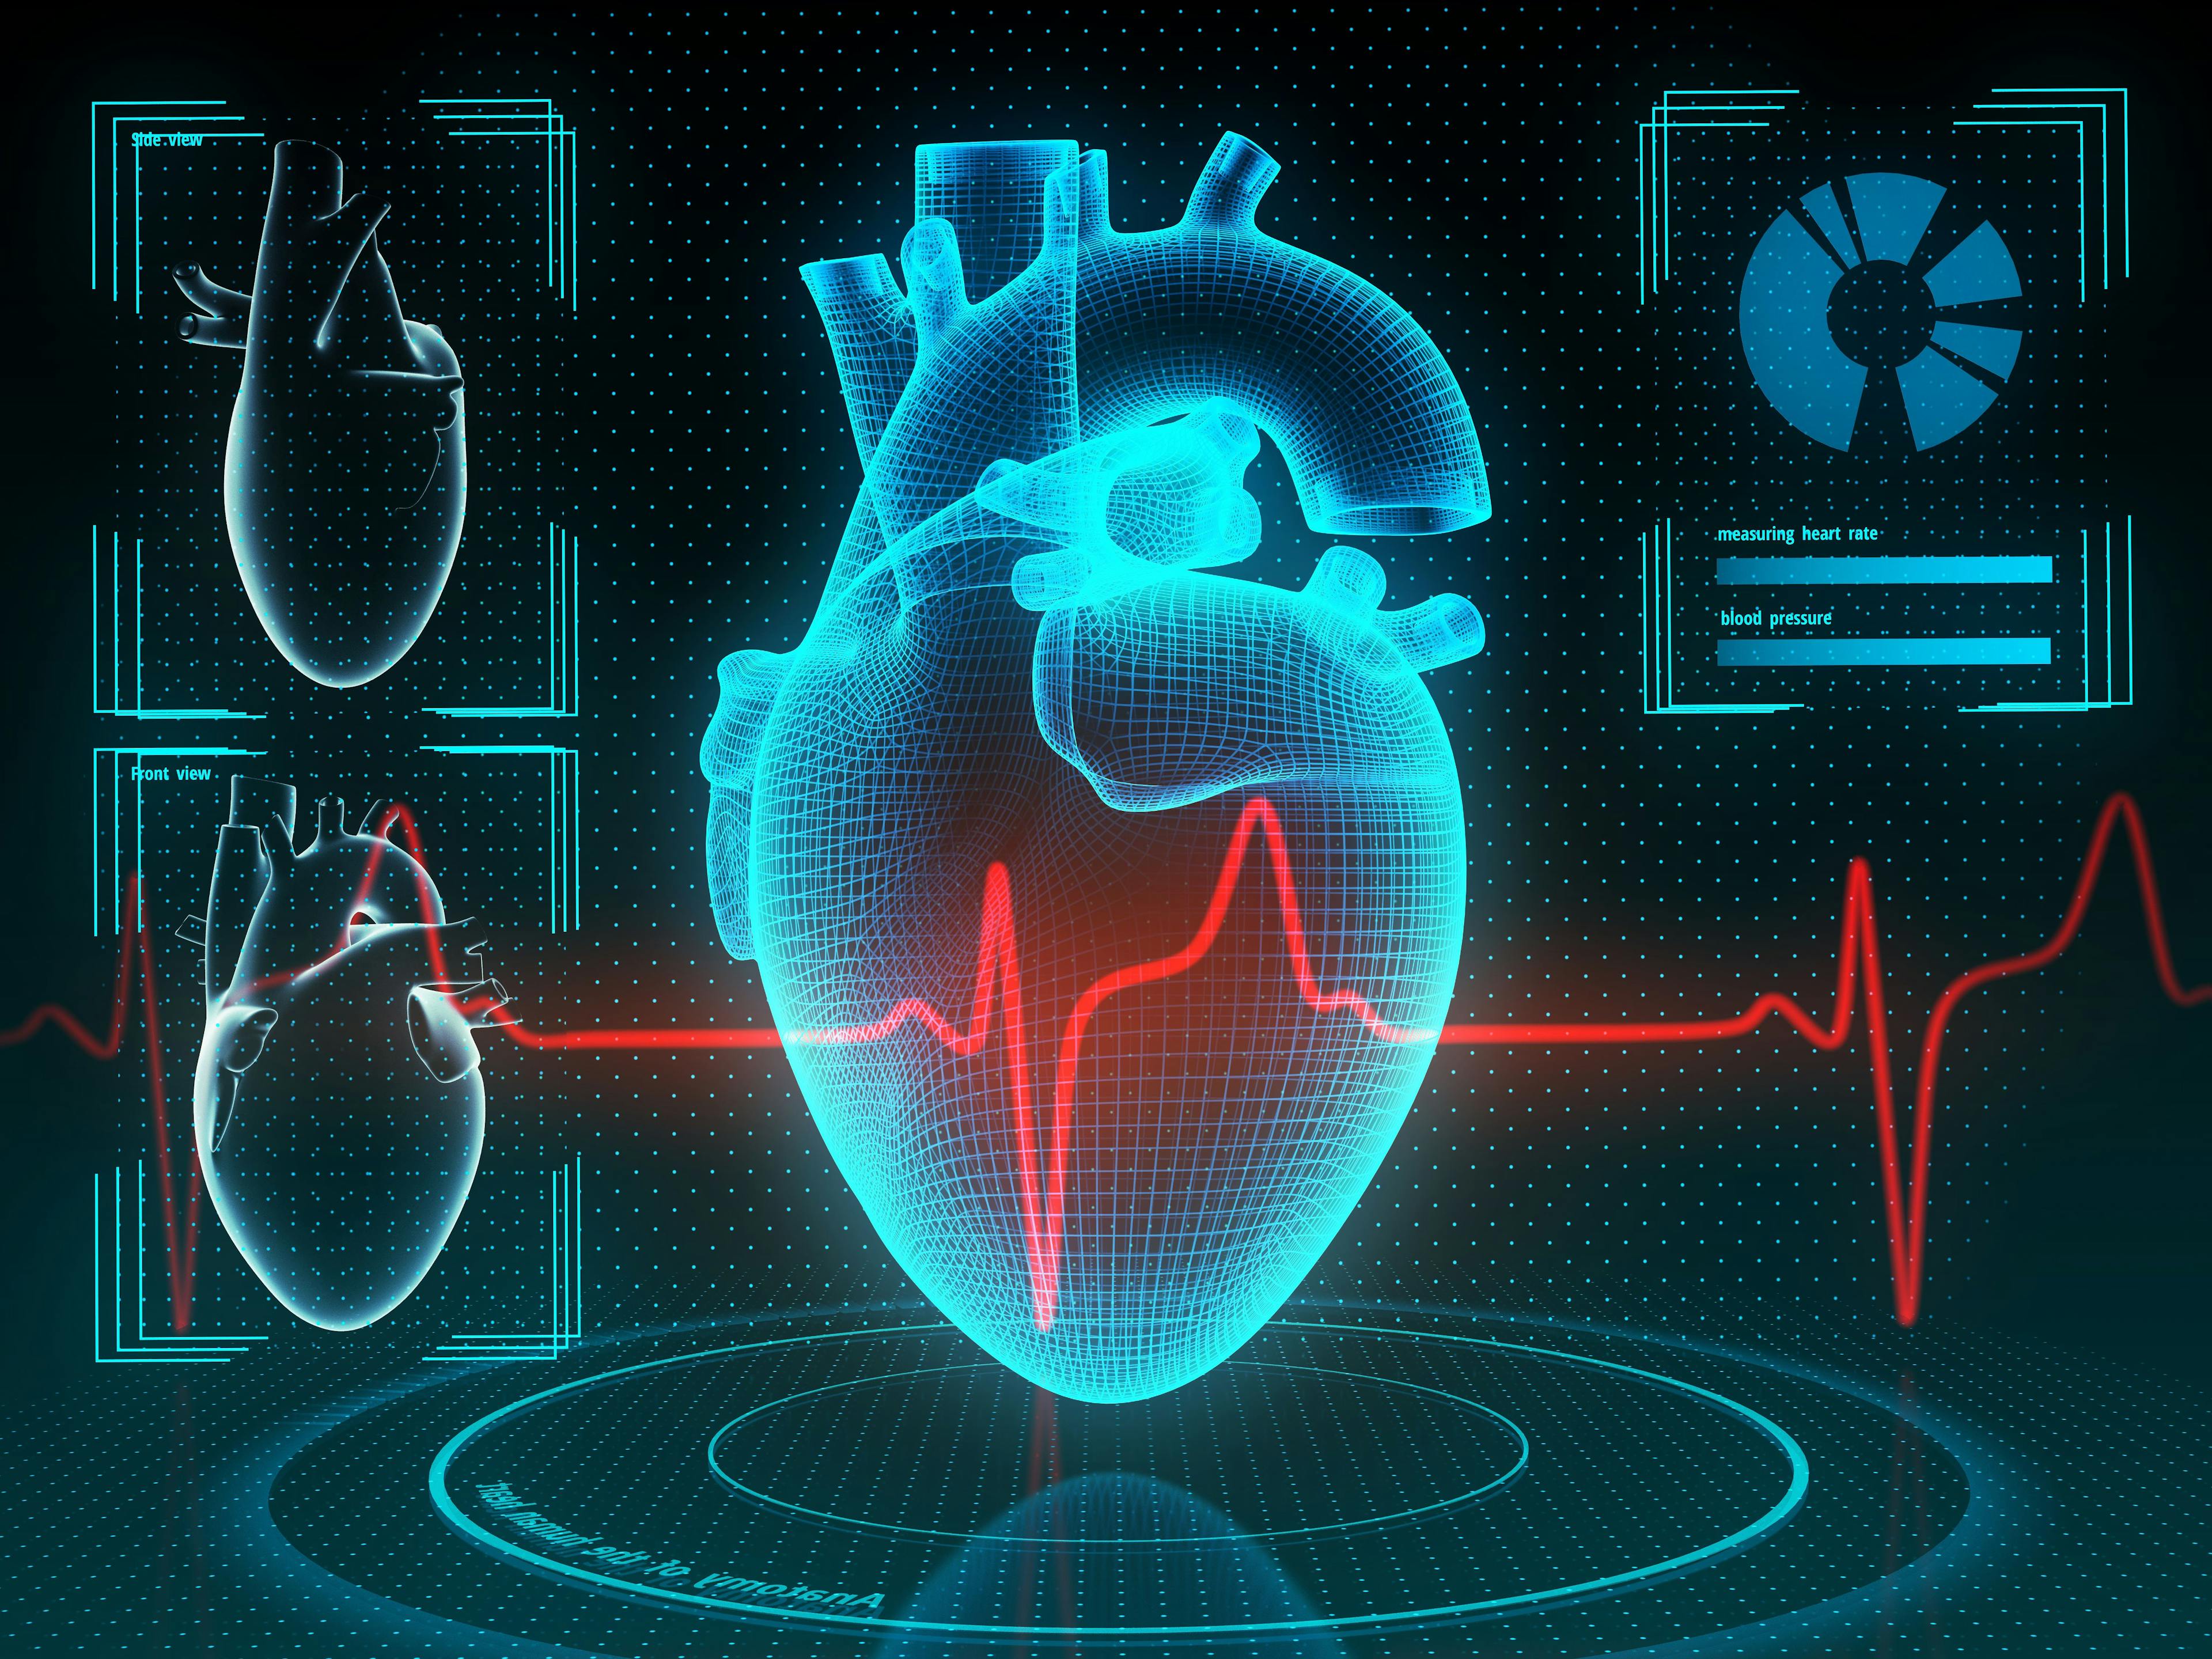 Heart with heartbeat | Image credit: iaremenko - stock.adobe.com